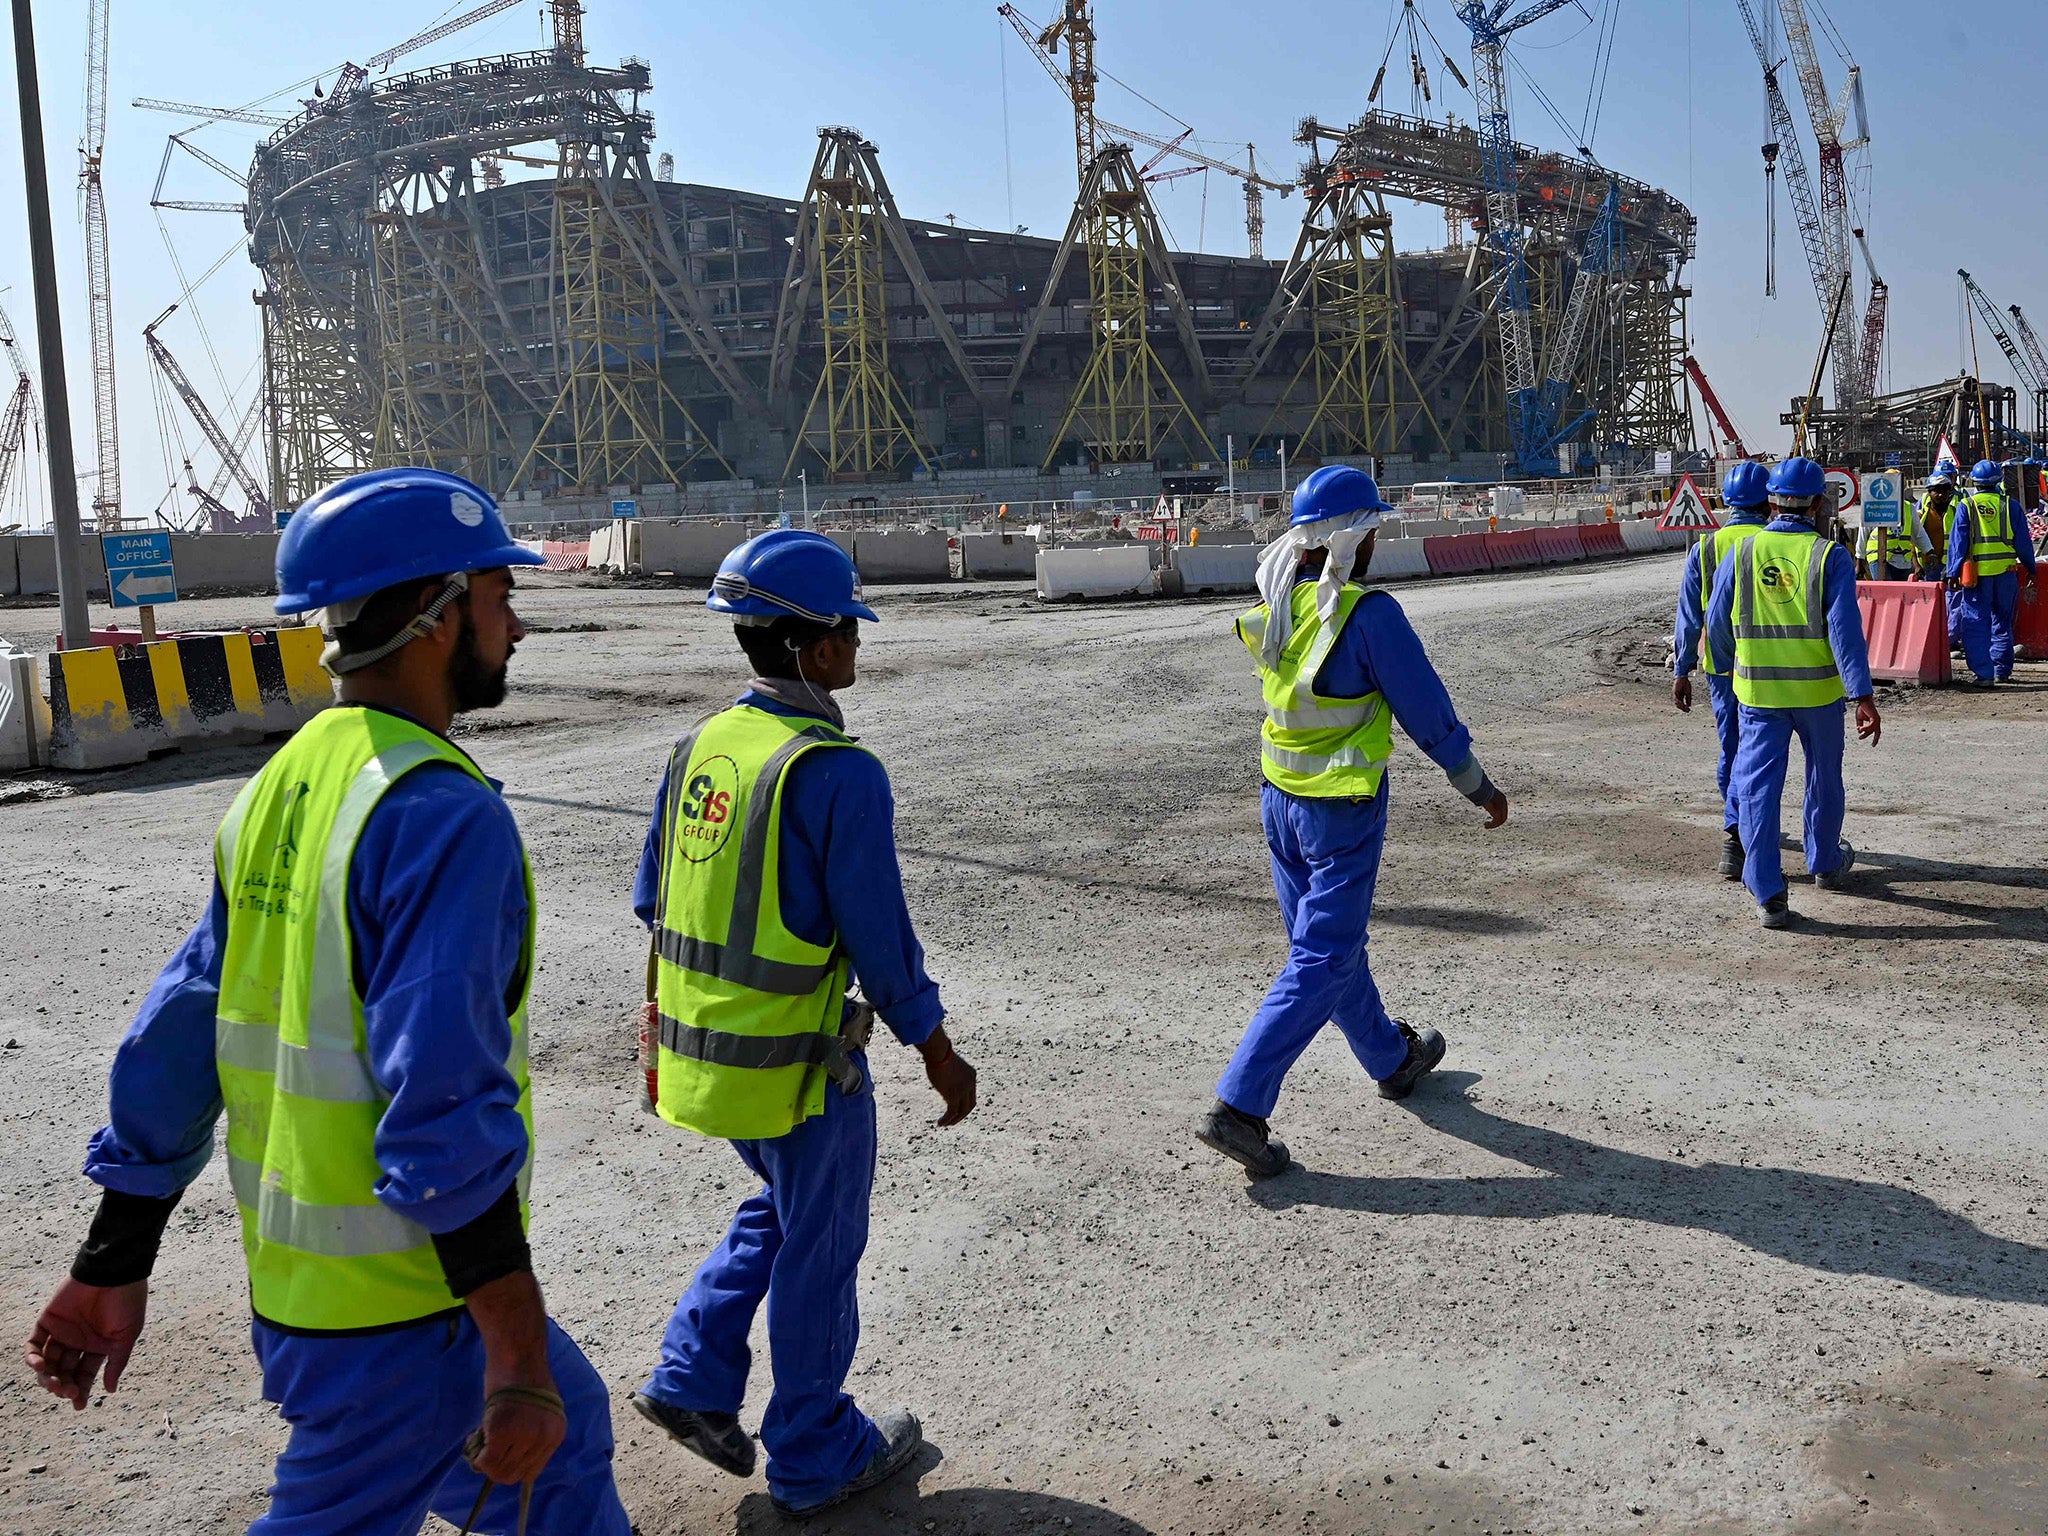 Qatar will host the football World Cup next year